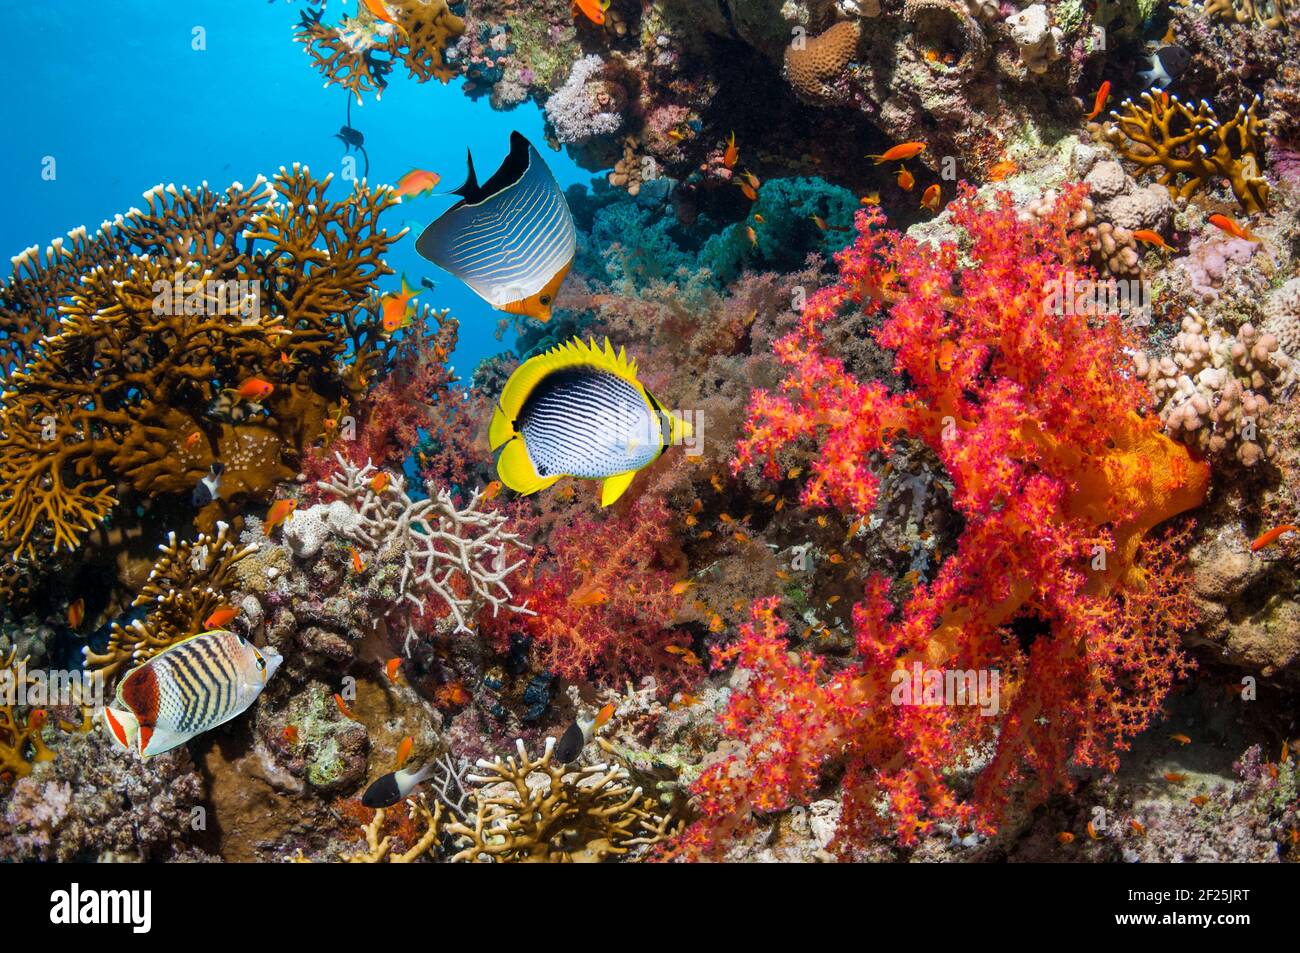 Paisaje de arrecifes de coral con un pez mariposa negro [Chaetodon melanotus], una cara naranja o un pez mariposa con capucha [Chaetodon larvatus] y una corona pero Foto de stock